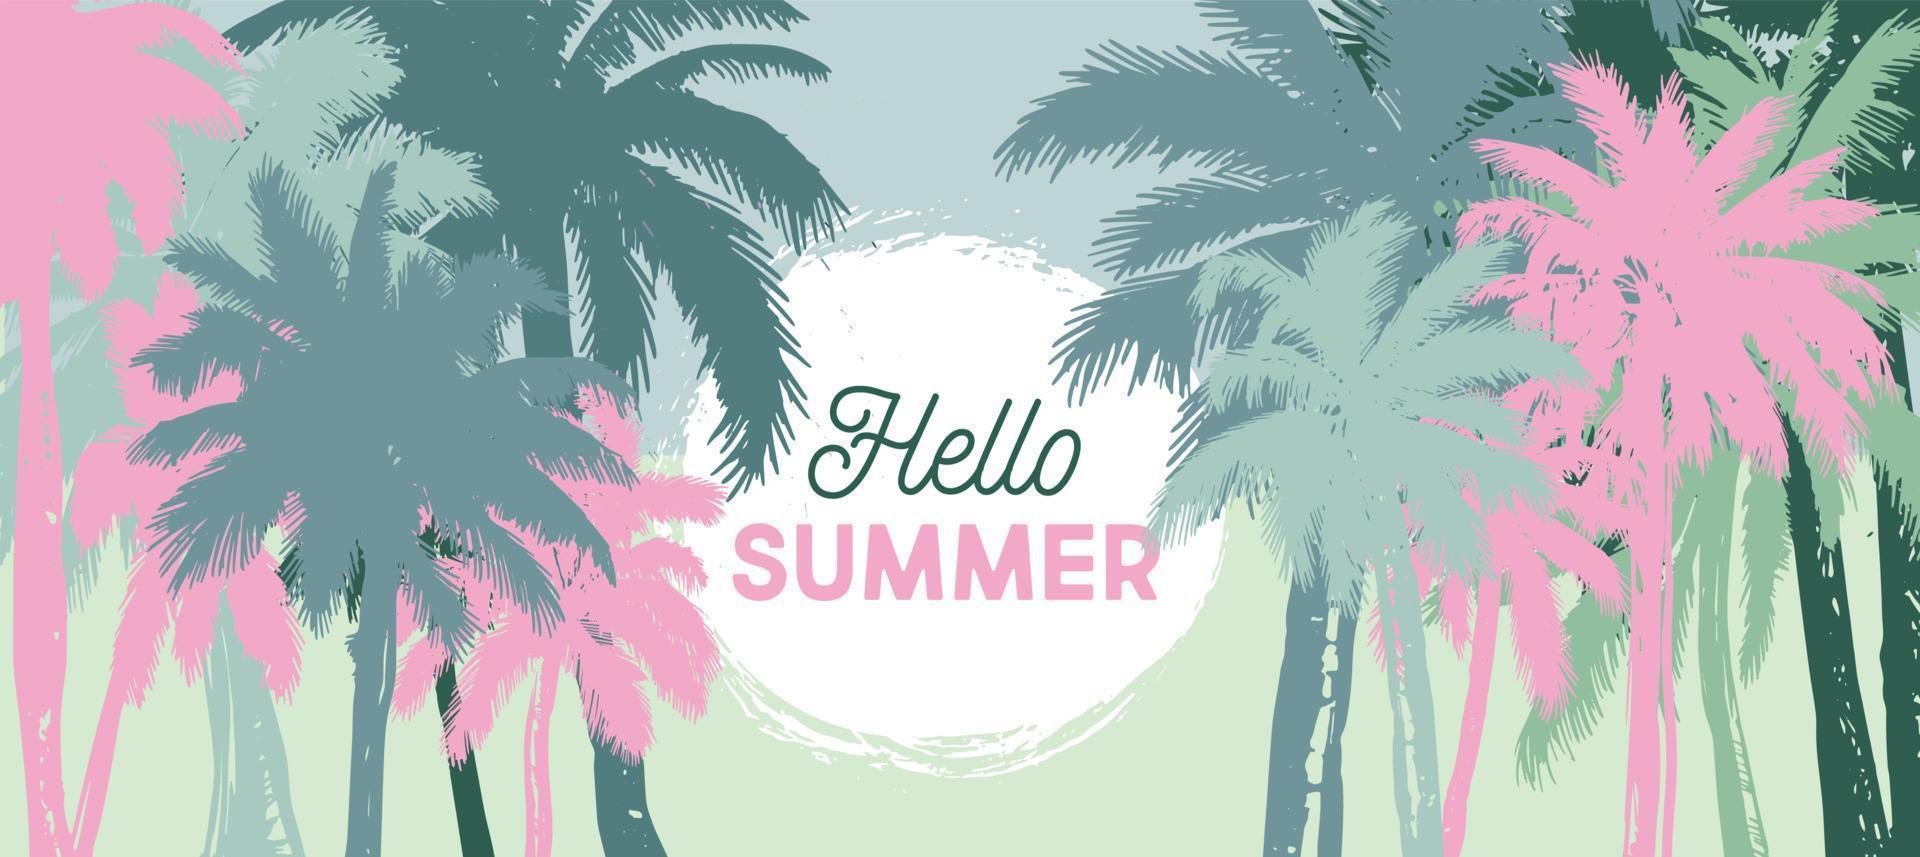 Hello Summer, Palm hand drawn illustrations, vector